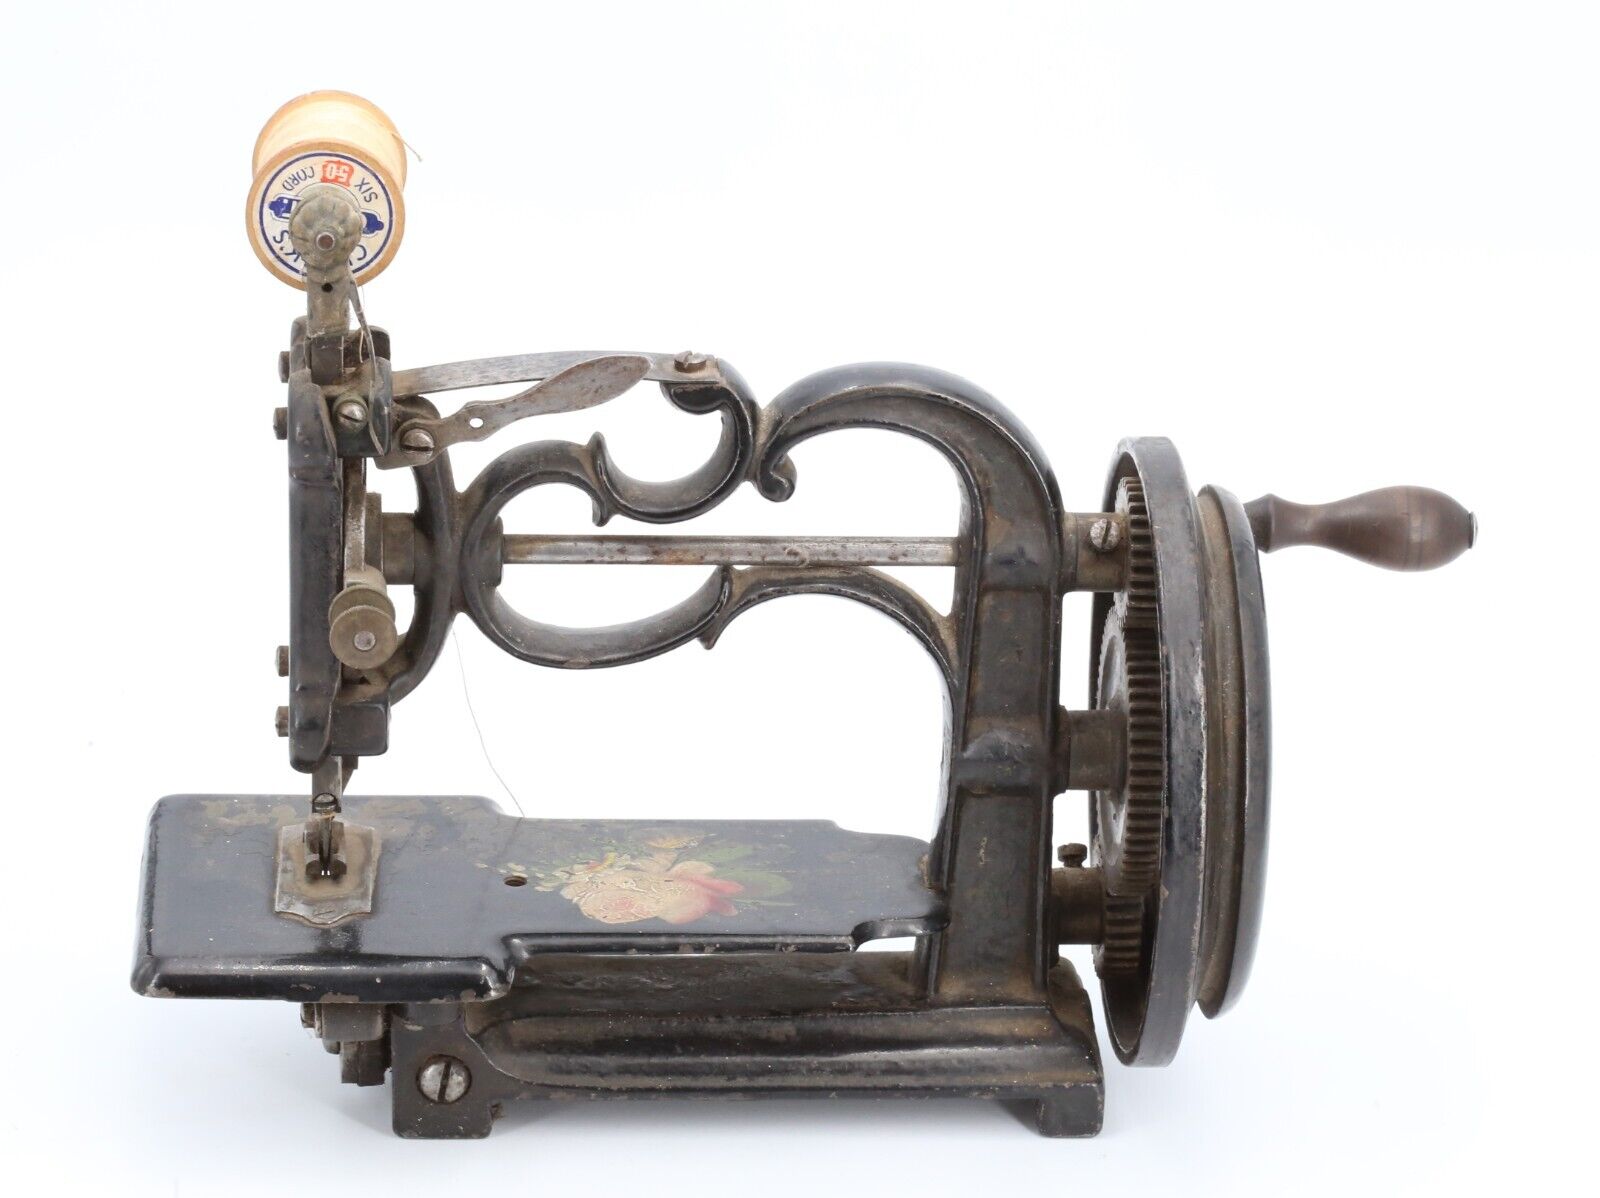 1860’s Hand-Cranked Chainstitch Sewing Machine, Charles Raymond? J.G. Folsom?